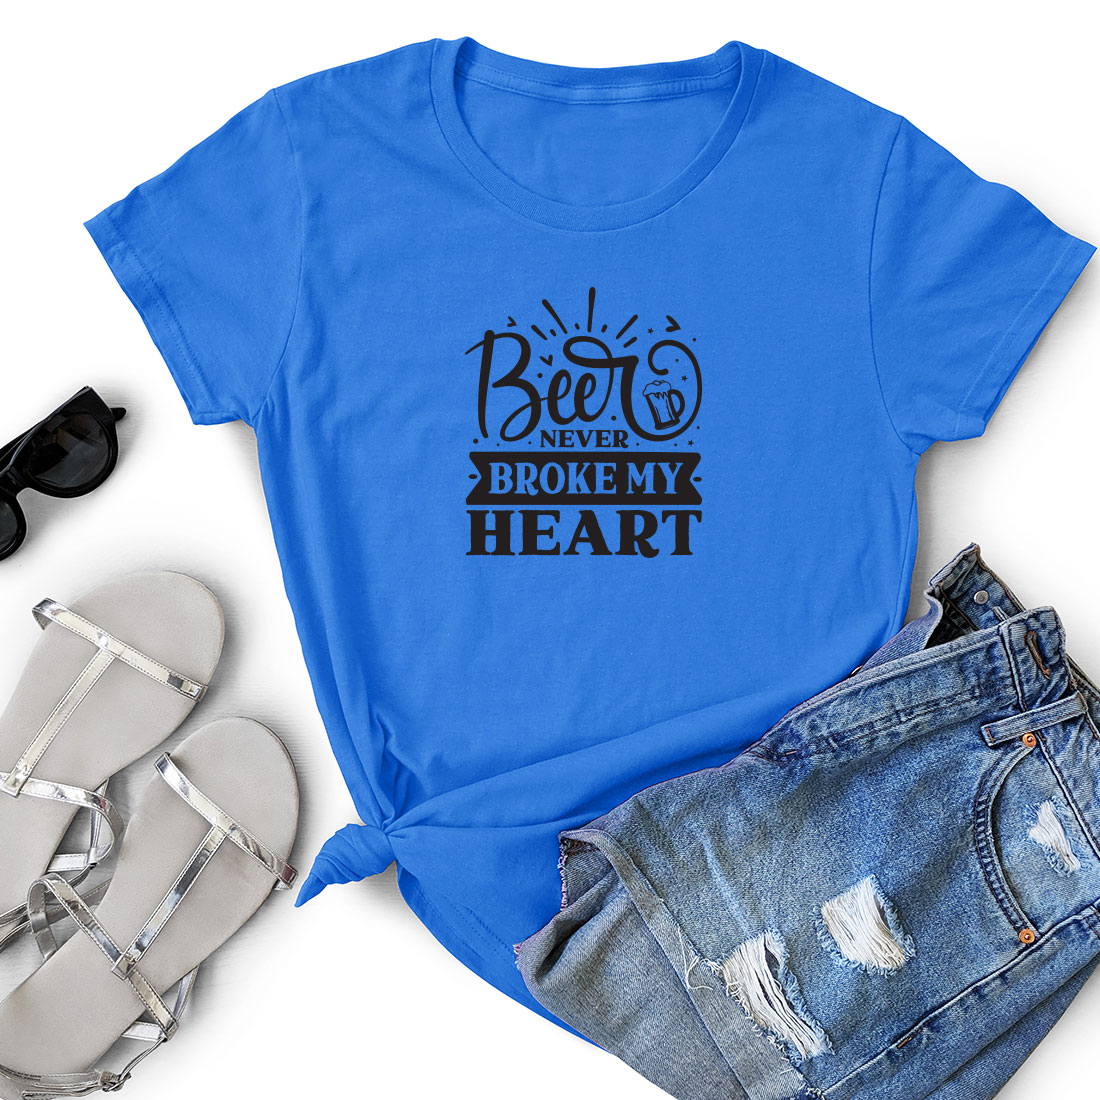 T - shirt that says best is never broken my heart.